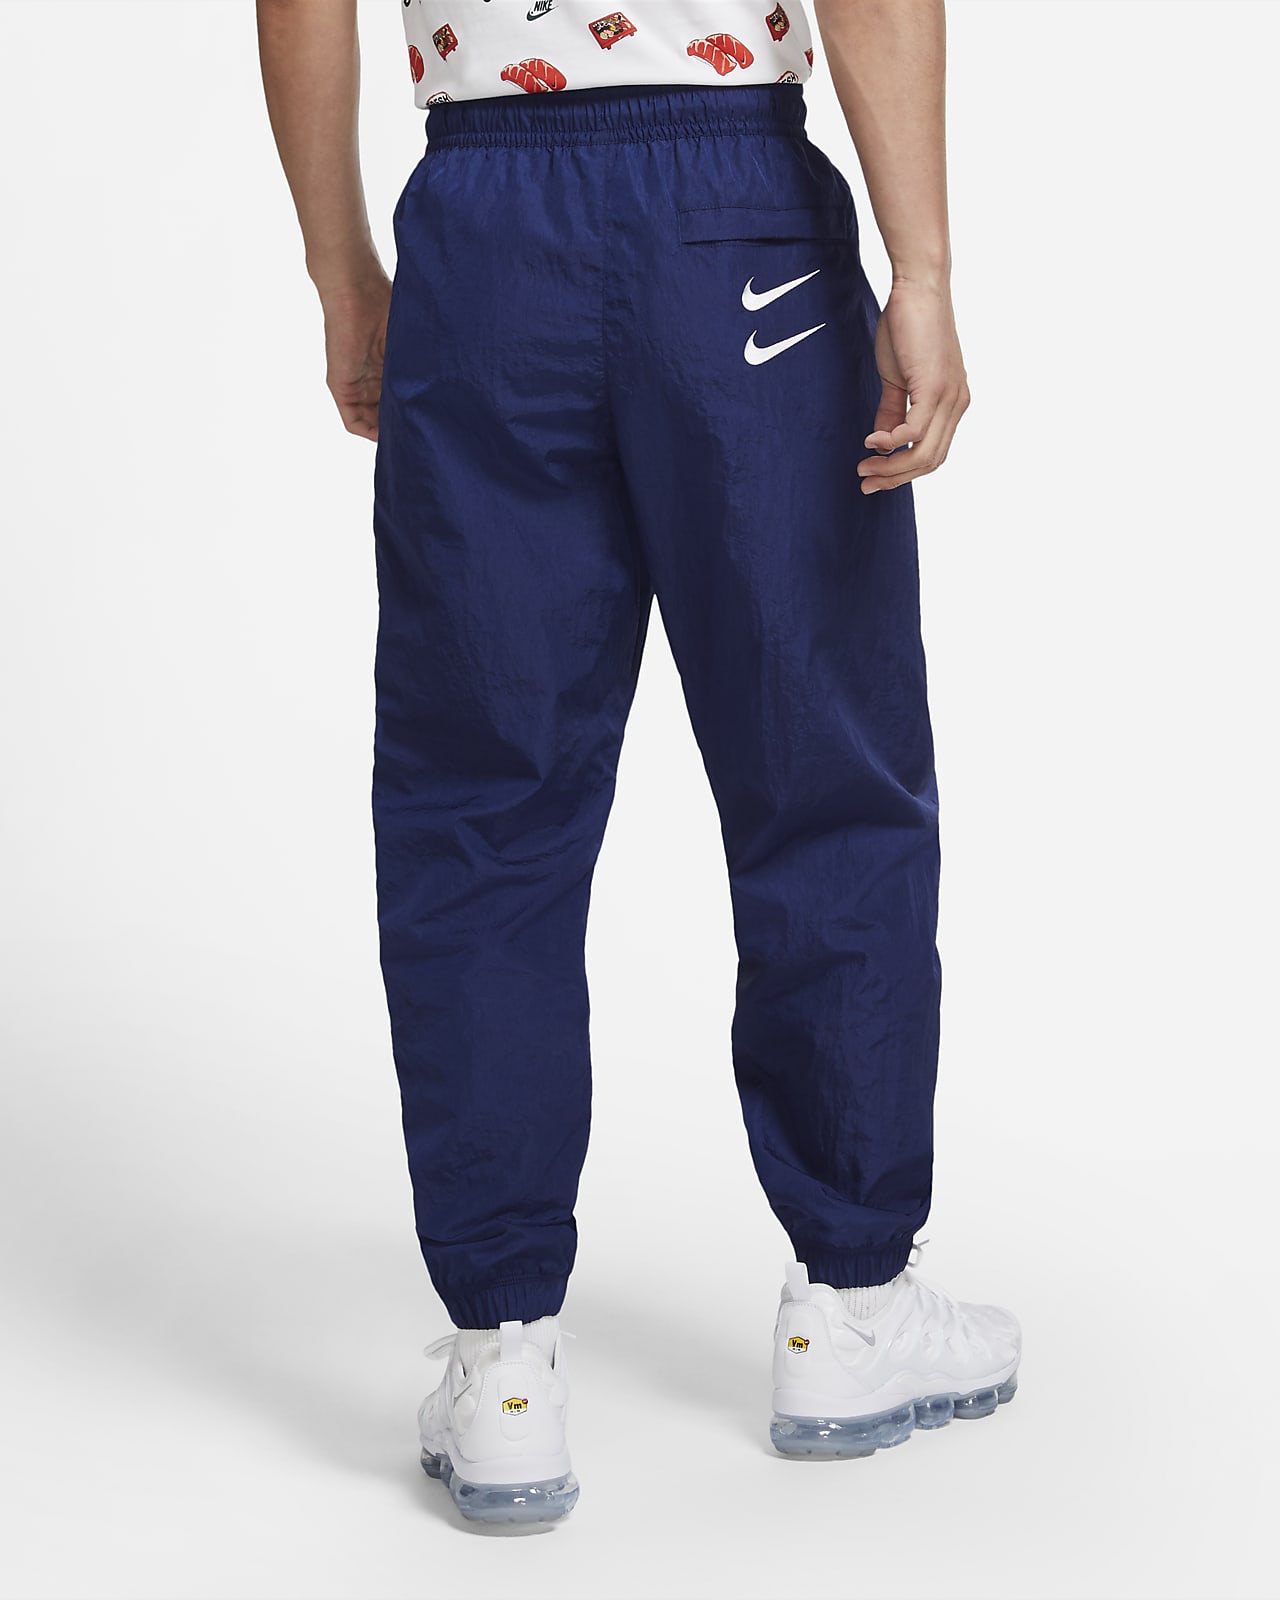 Pantalones tejidos hombre Nike Sportswear Swoosh.